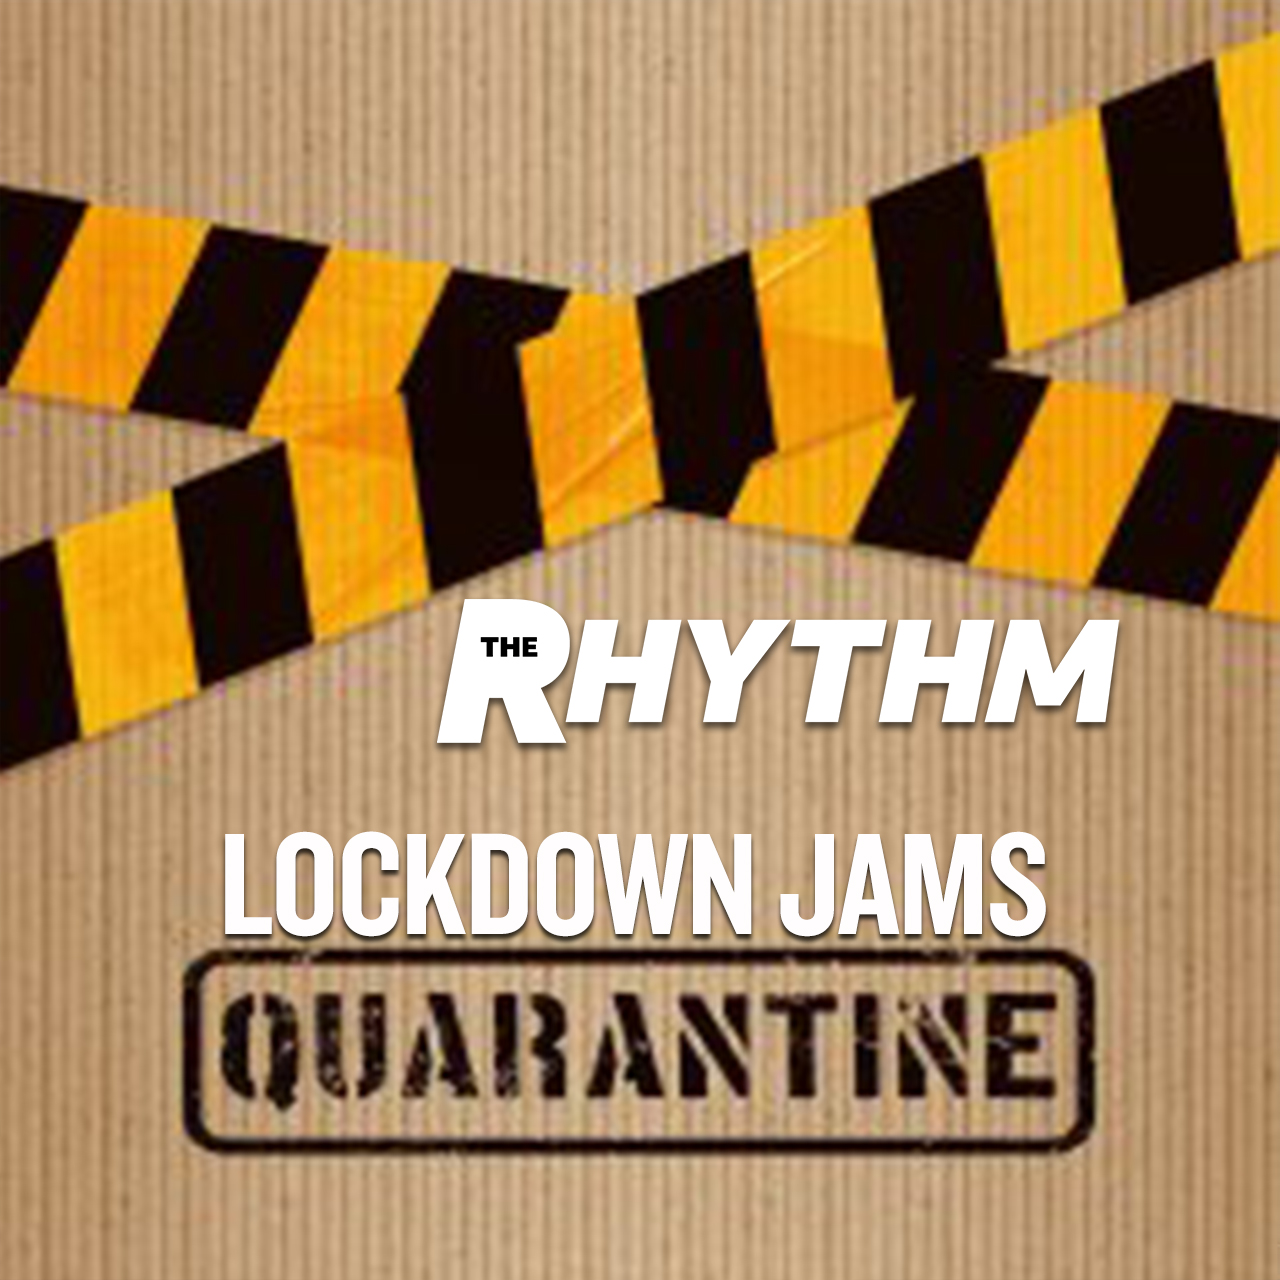 lockdown jams playlist cover